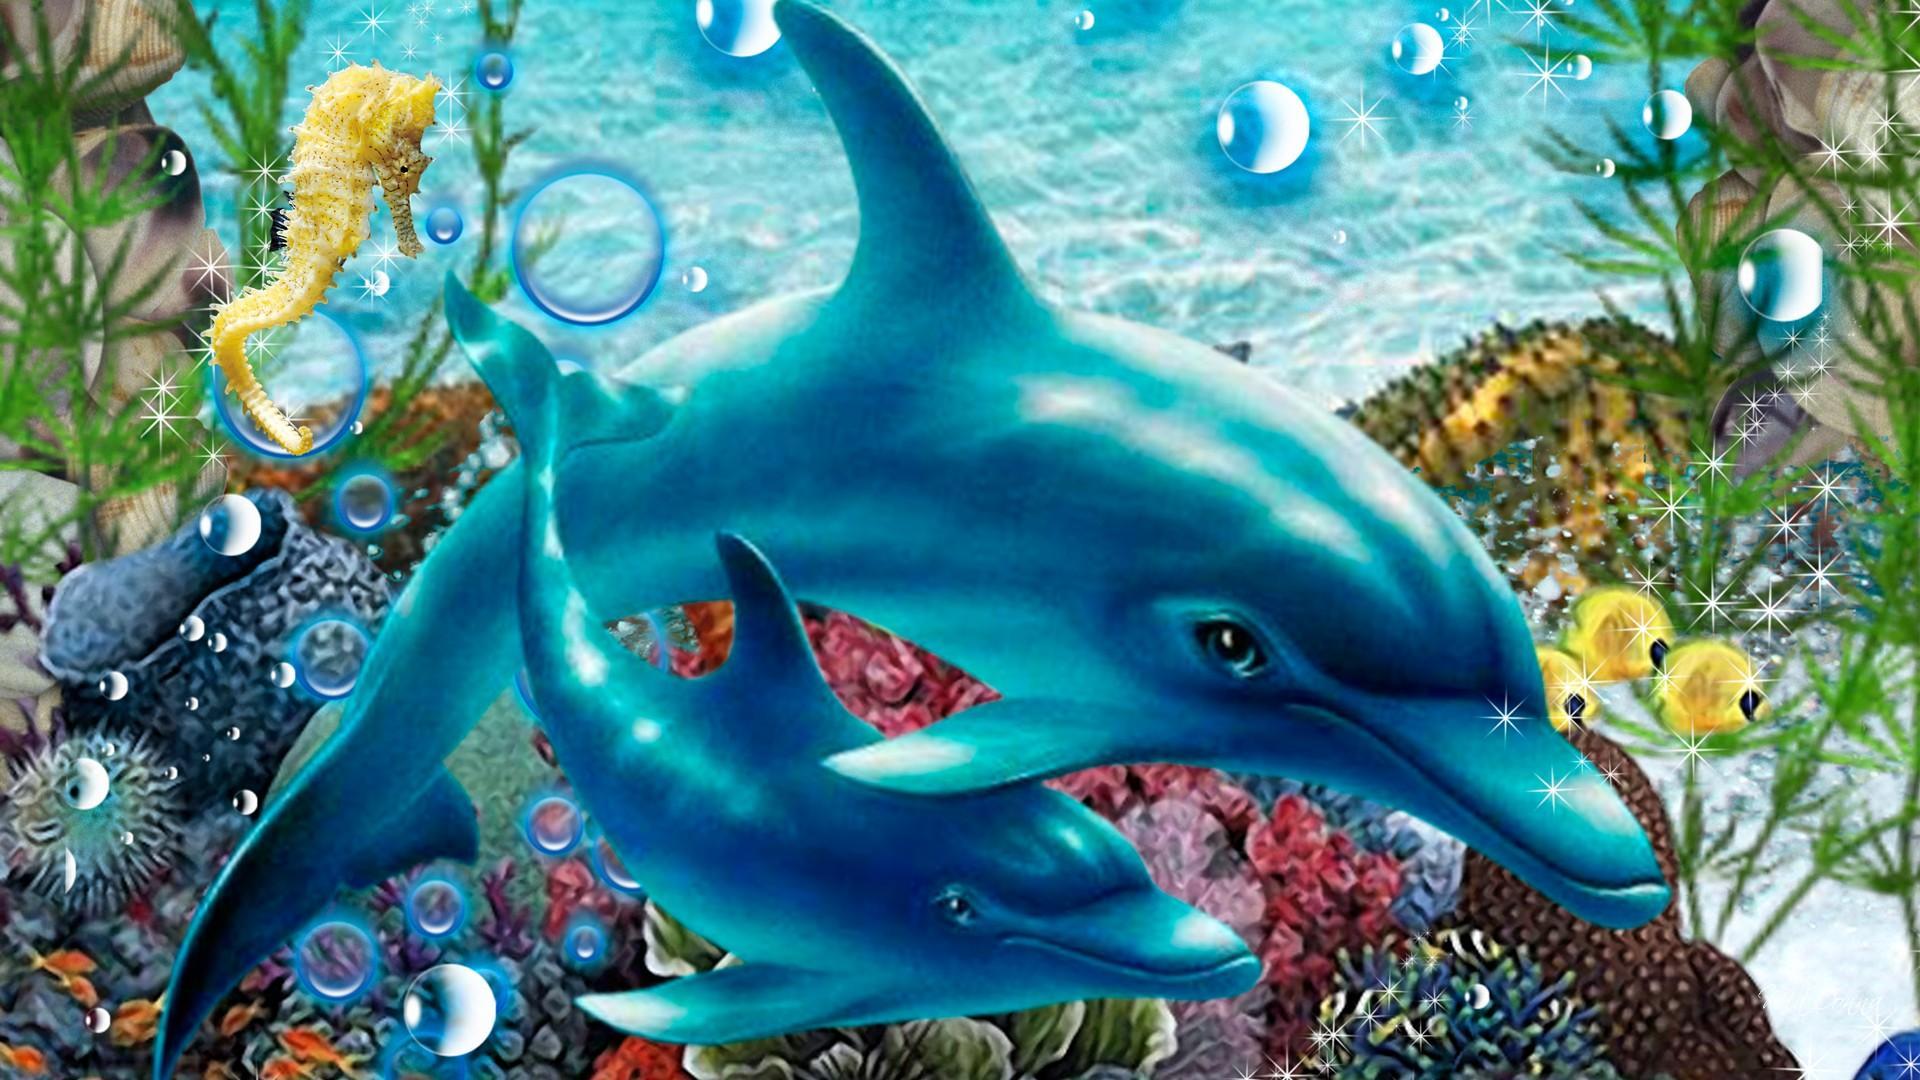 fond d'écran fundo do mar,dauphin,biologie marine,grand dauphin commun,dauphin commun à bec court,mammifère marin